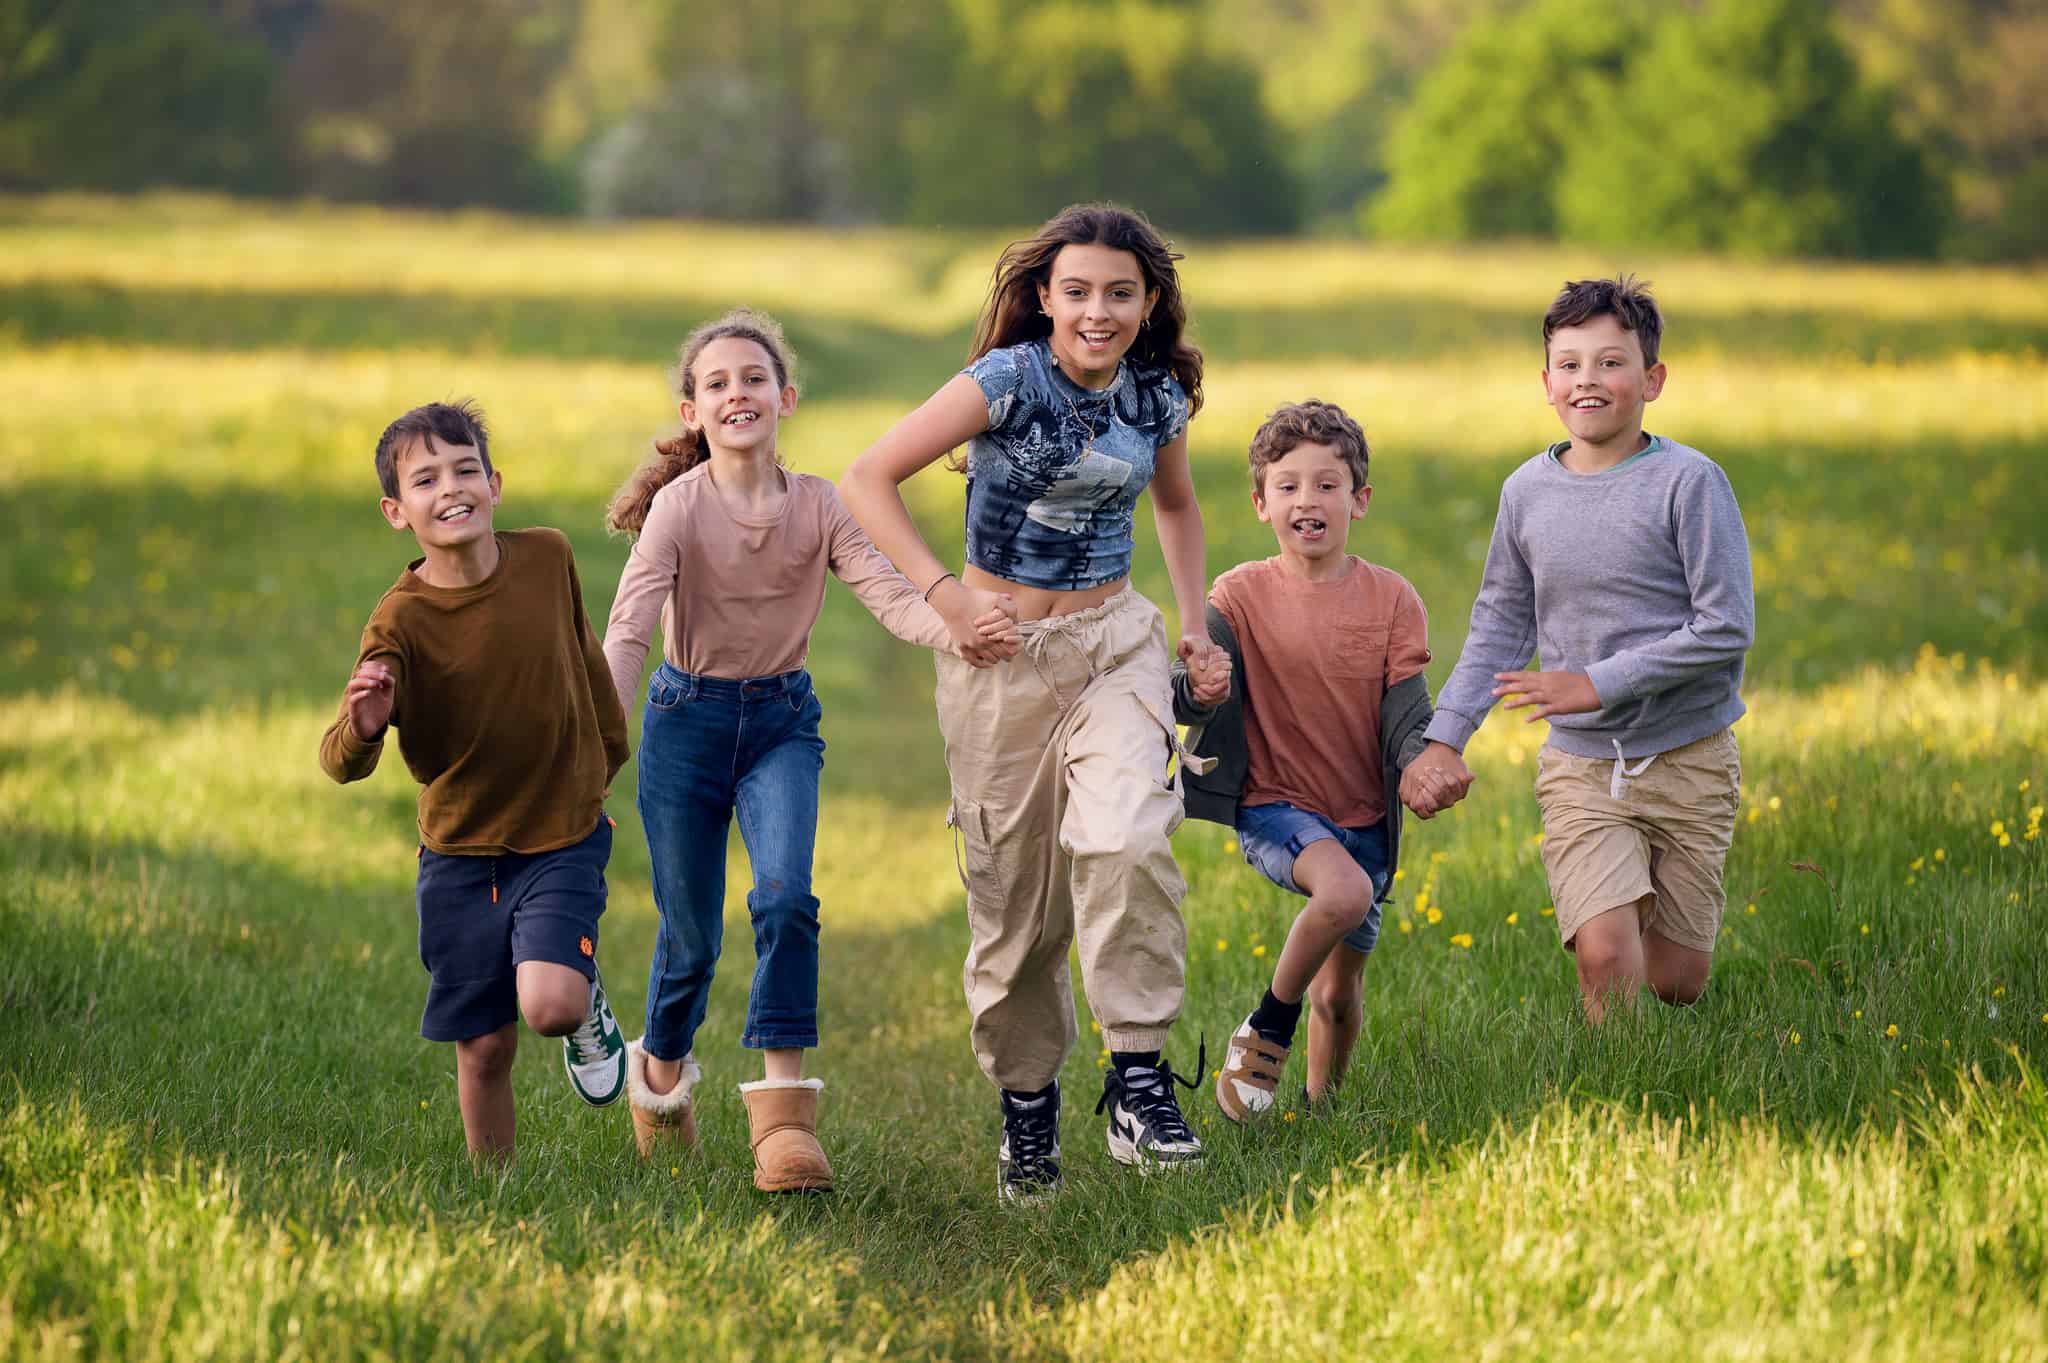 photograph of 5 smiling children holding hands running through a field